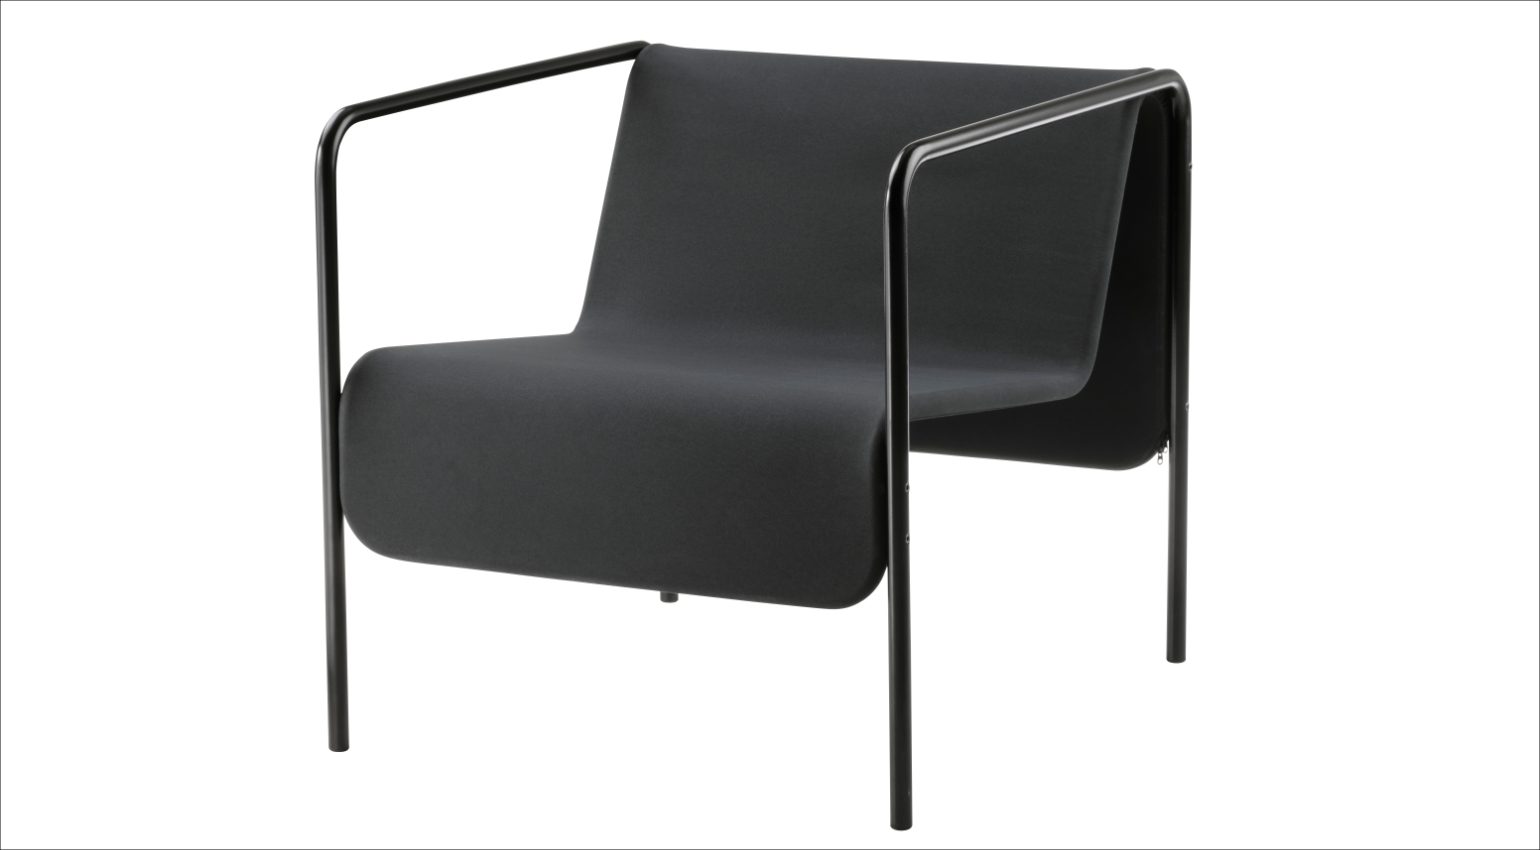 Ikea Obegränsad: studio furniture and turntable by Swedish House Mafia